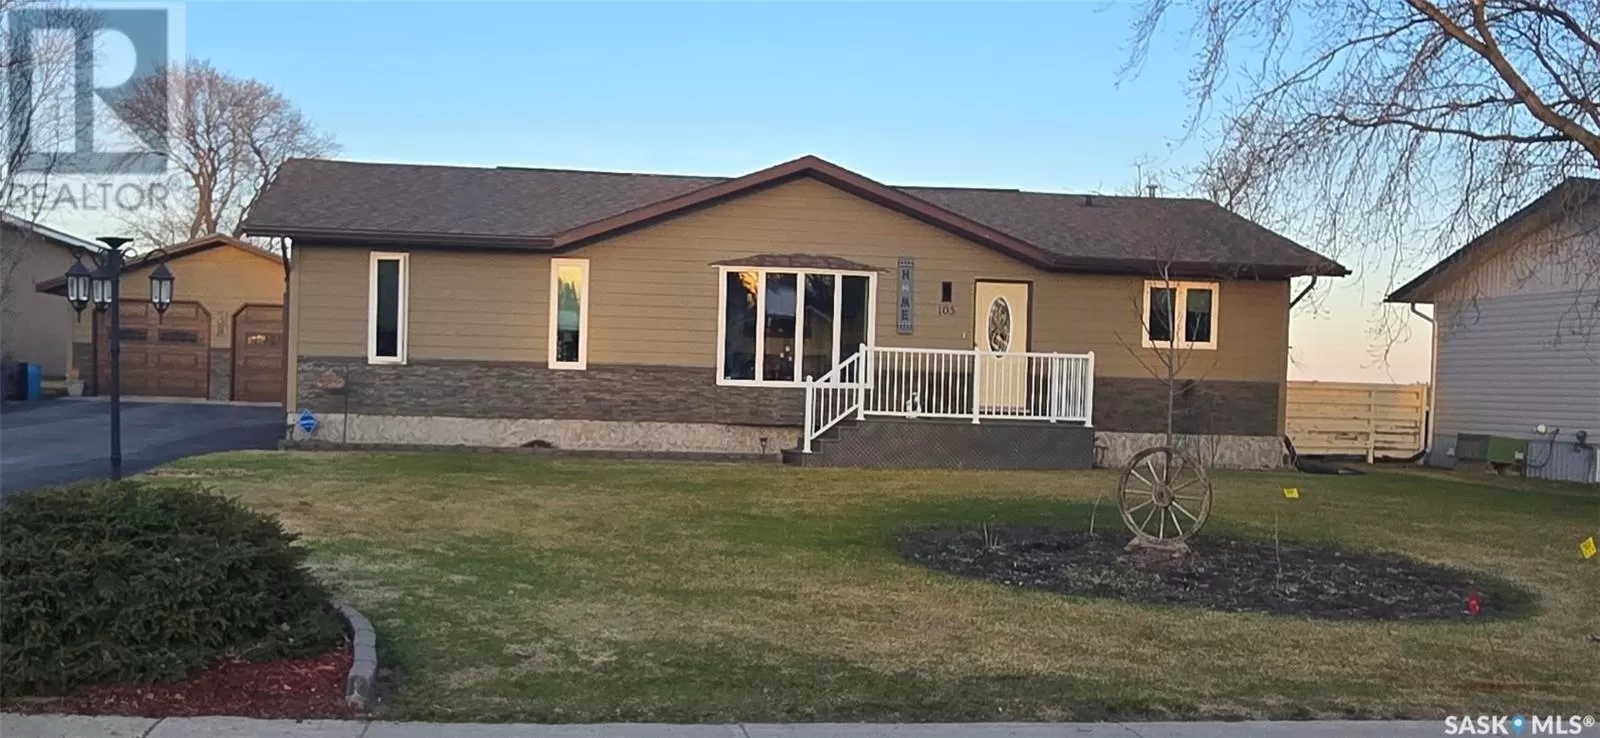 House for rent: 105 Government Road, Stoughton, Saskatchewan S0G 4T0